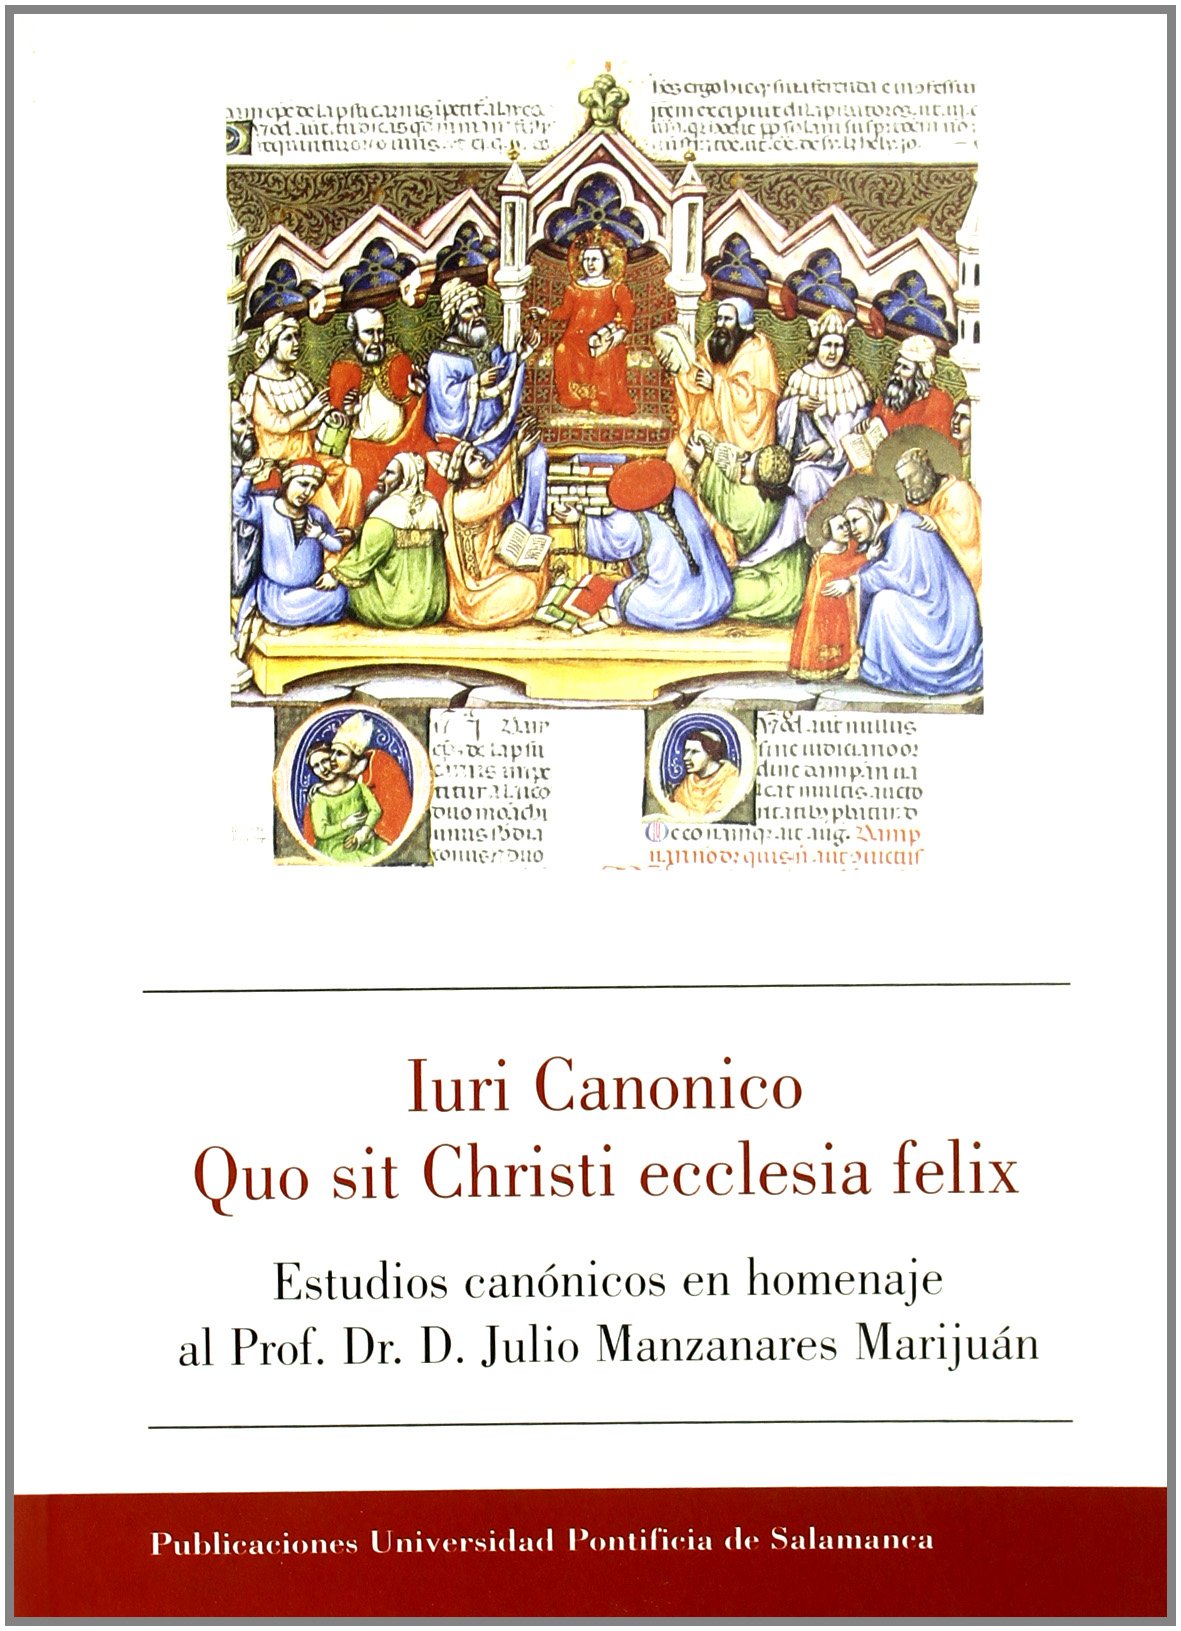 Imagen de portada del libro Iuri Canonico quo sit Christi Ecclesia felix